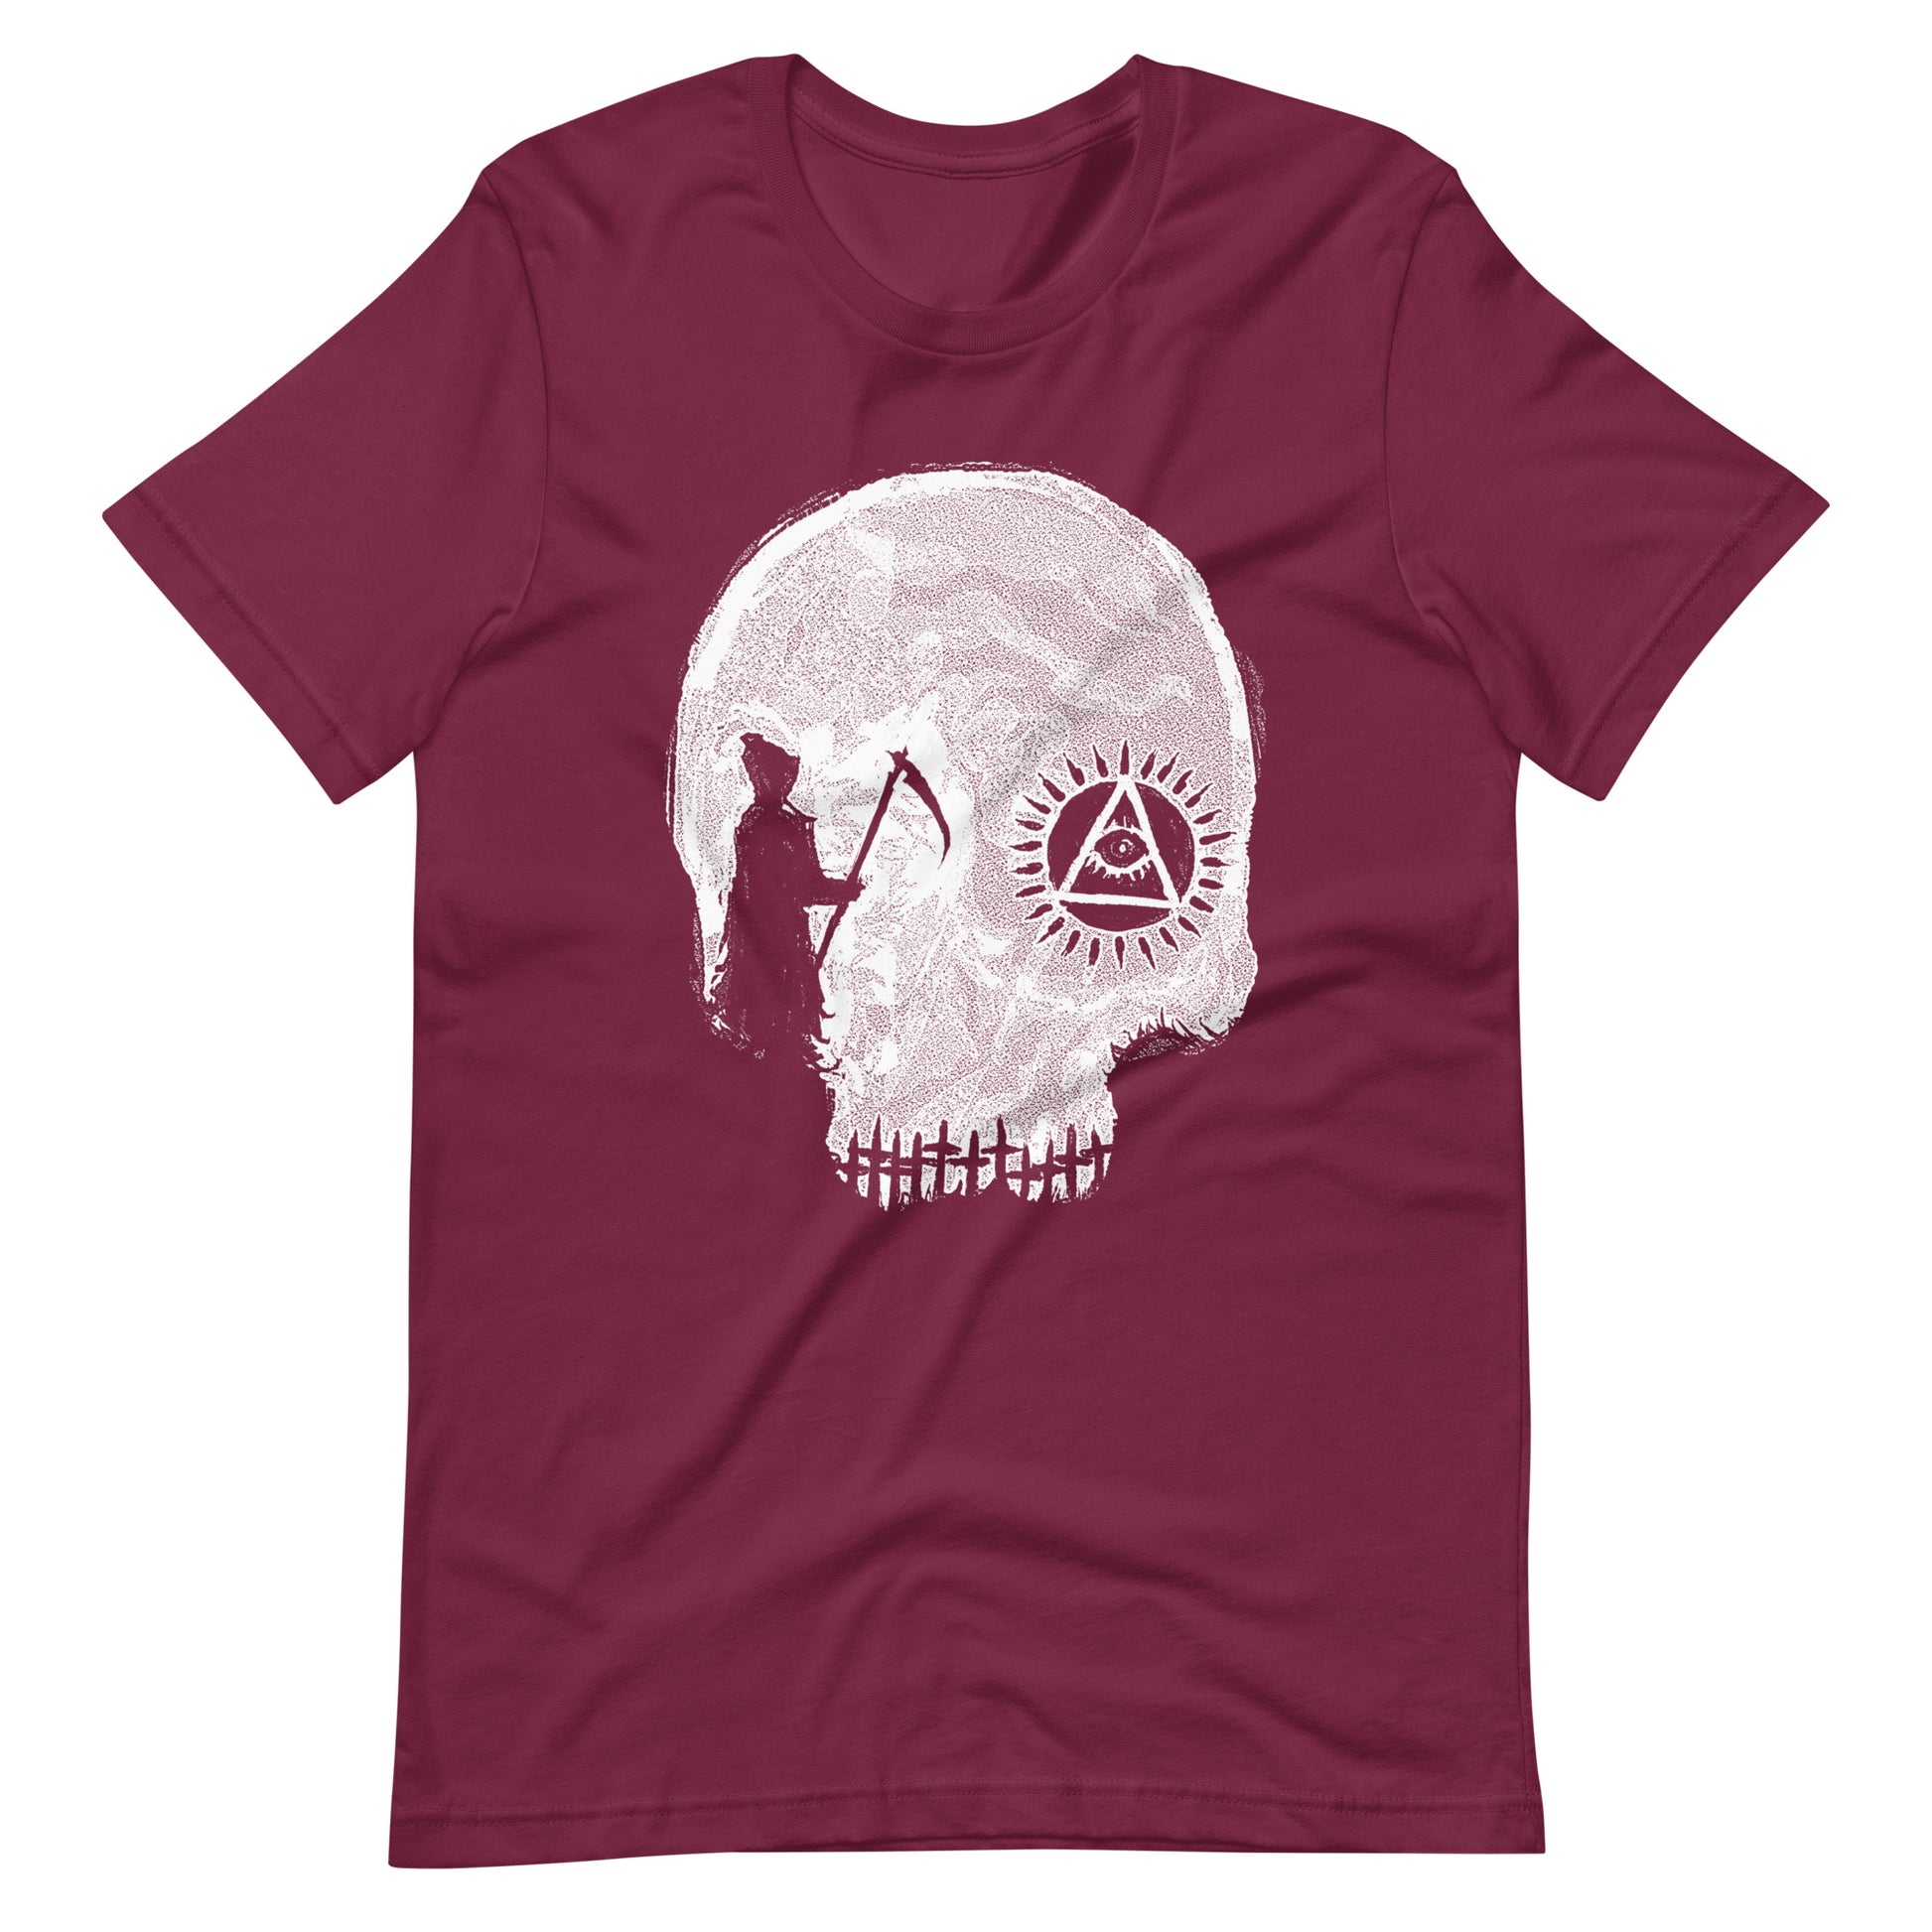 Death Row - Men's t-shirt - Maroon Front